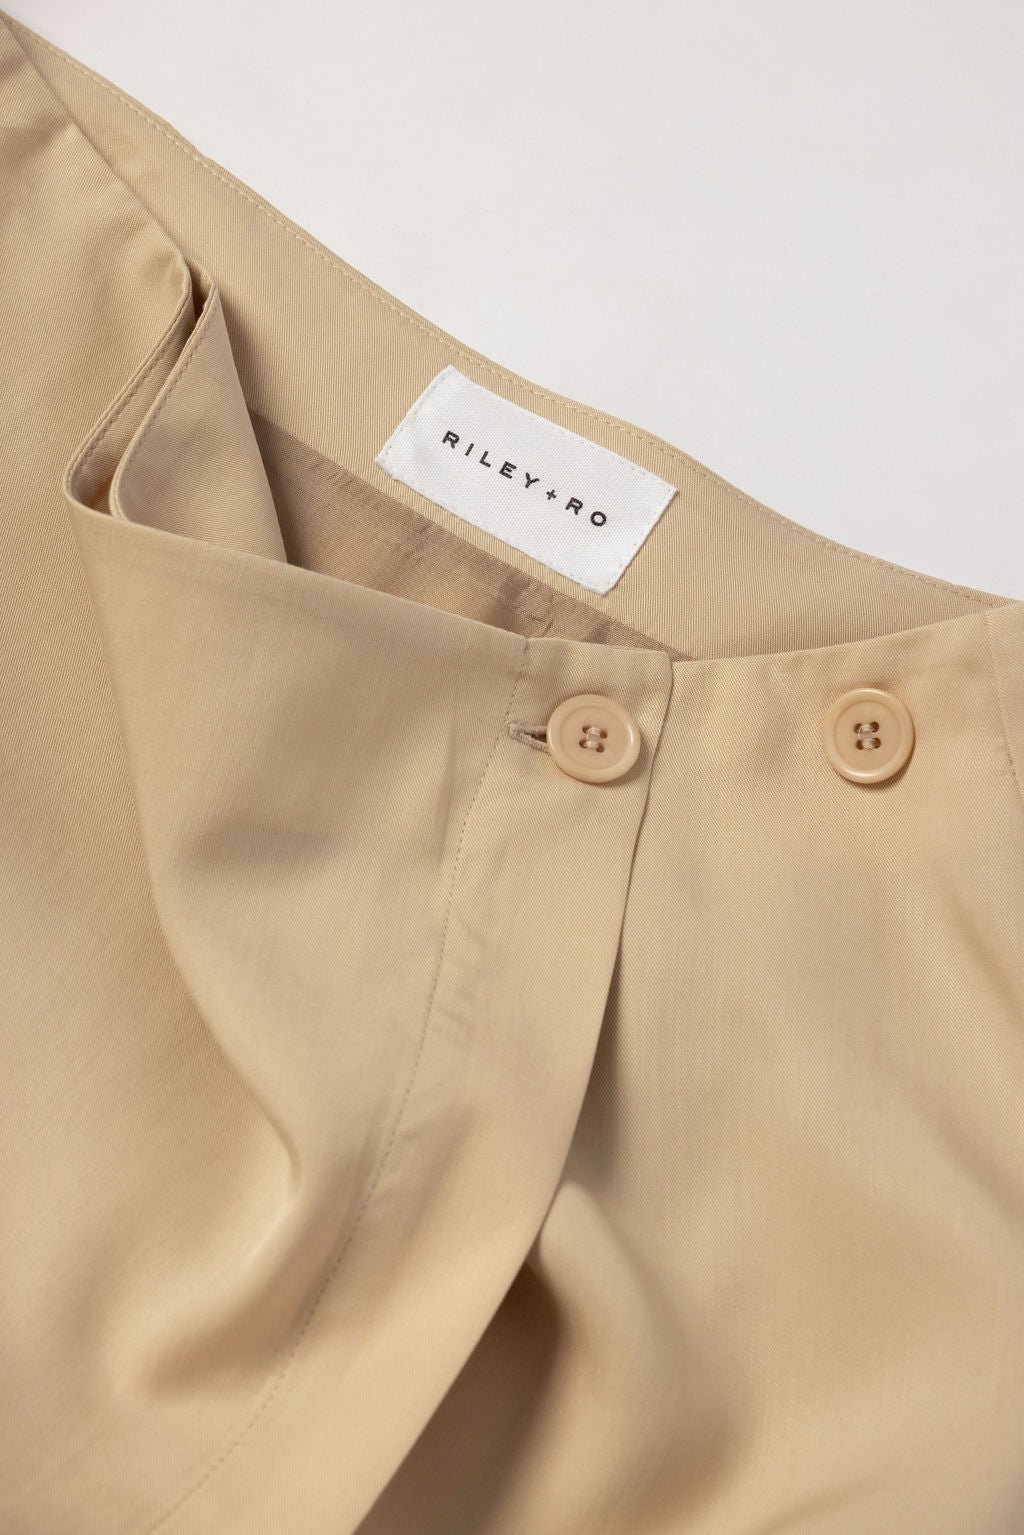 Minimalist Capsule Wardrobe for Work Cream Skirt Adjustable Waist Buttons